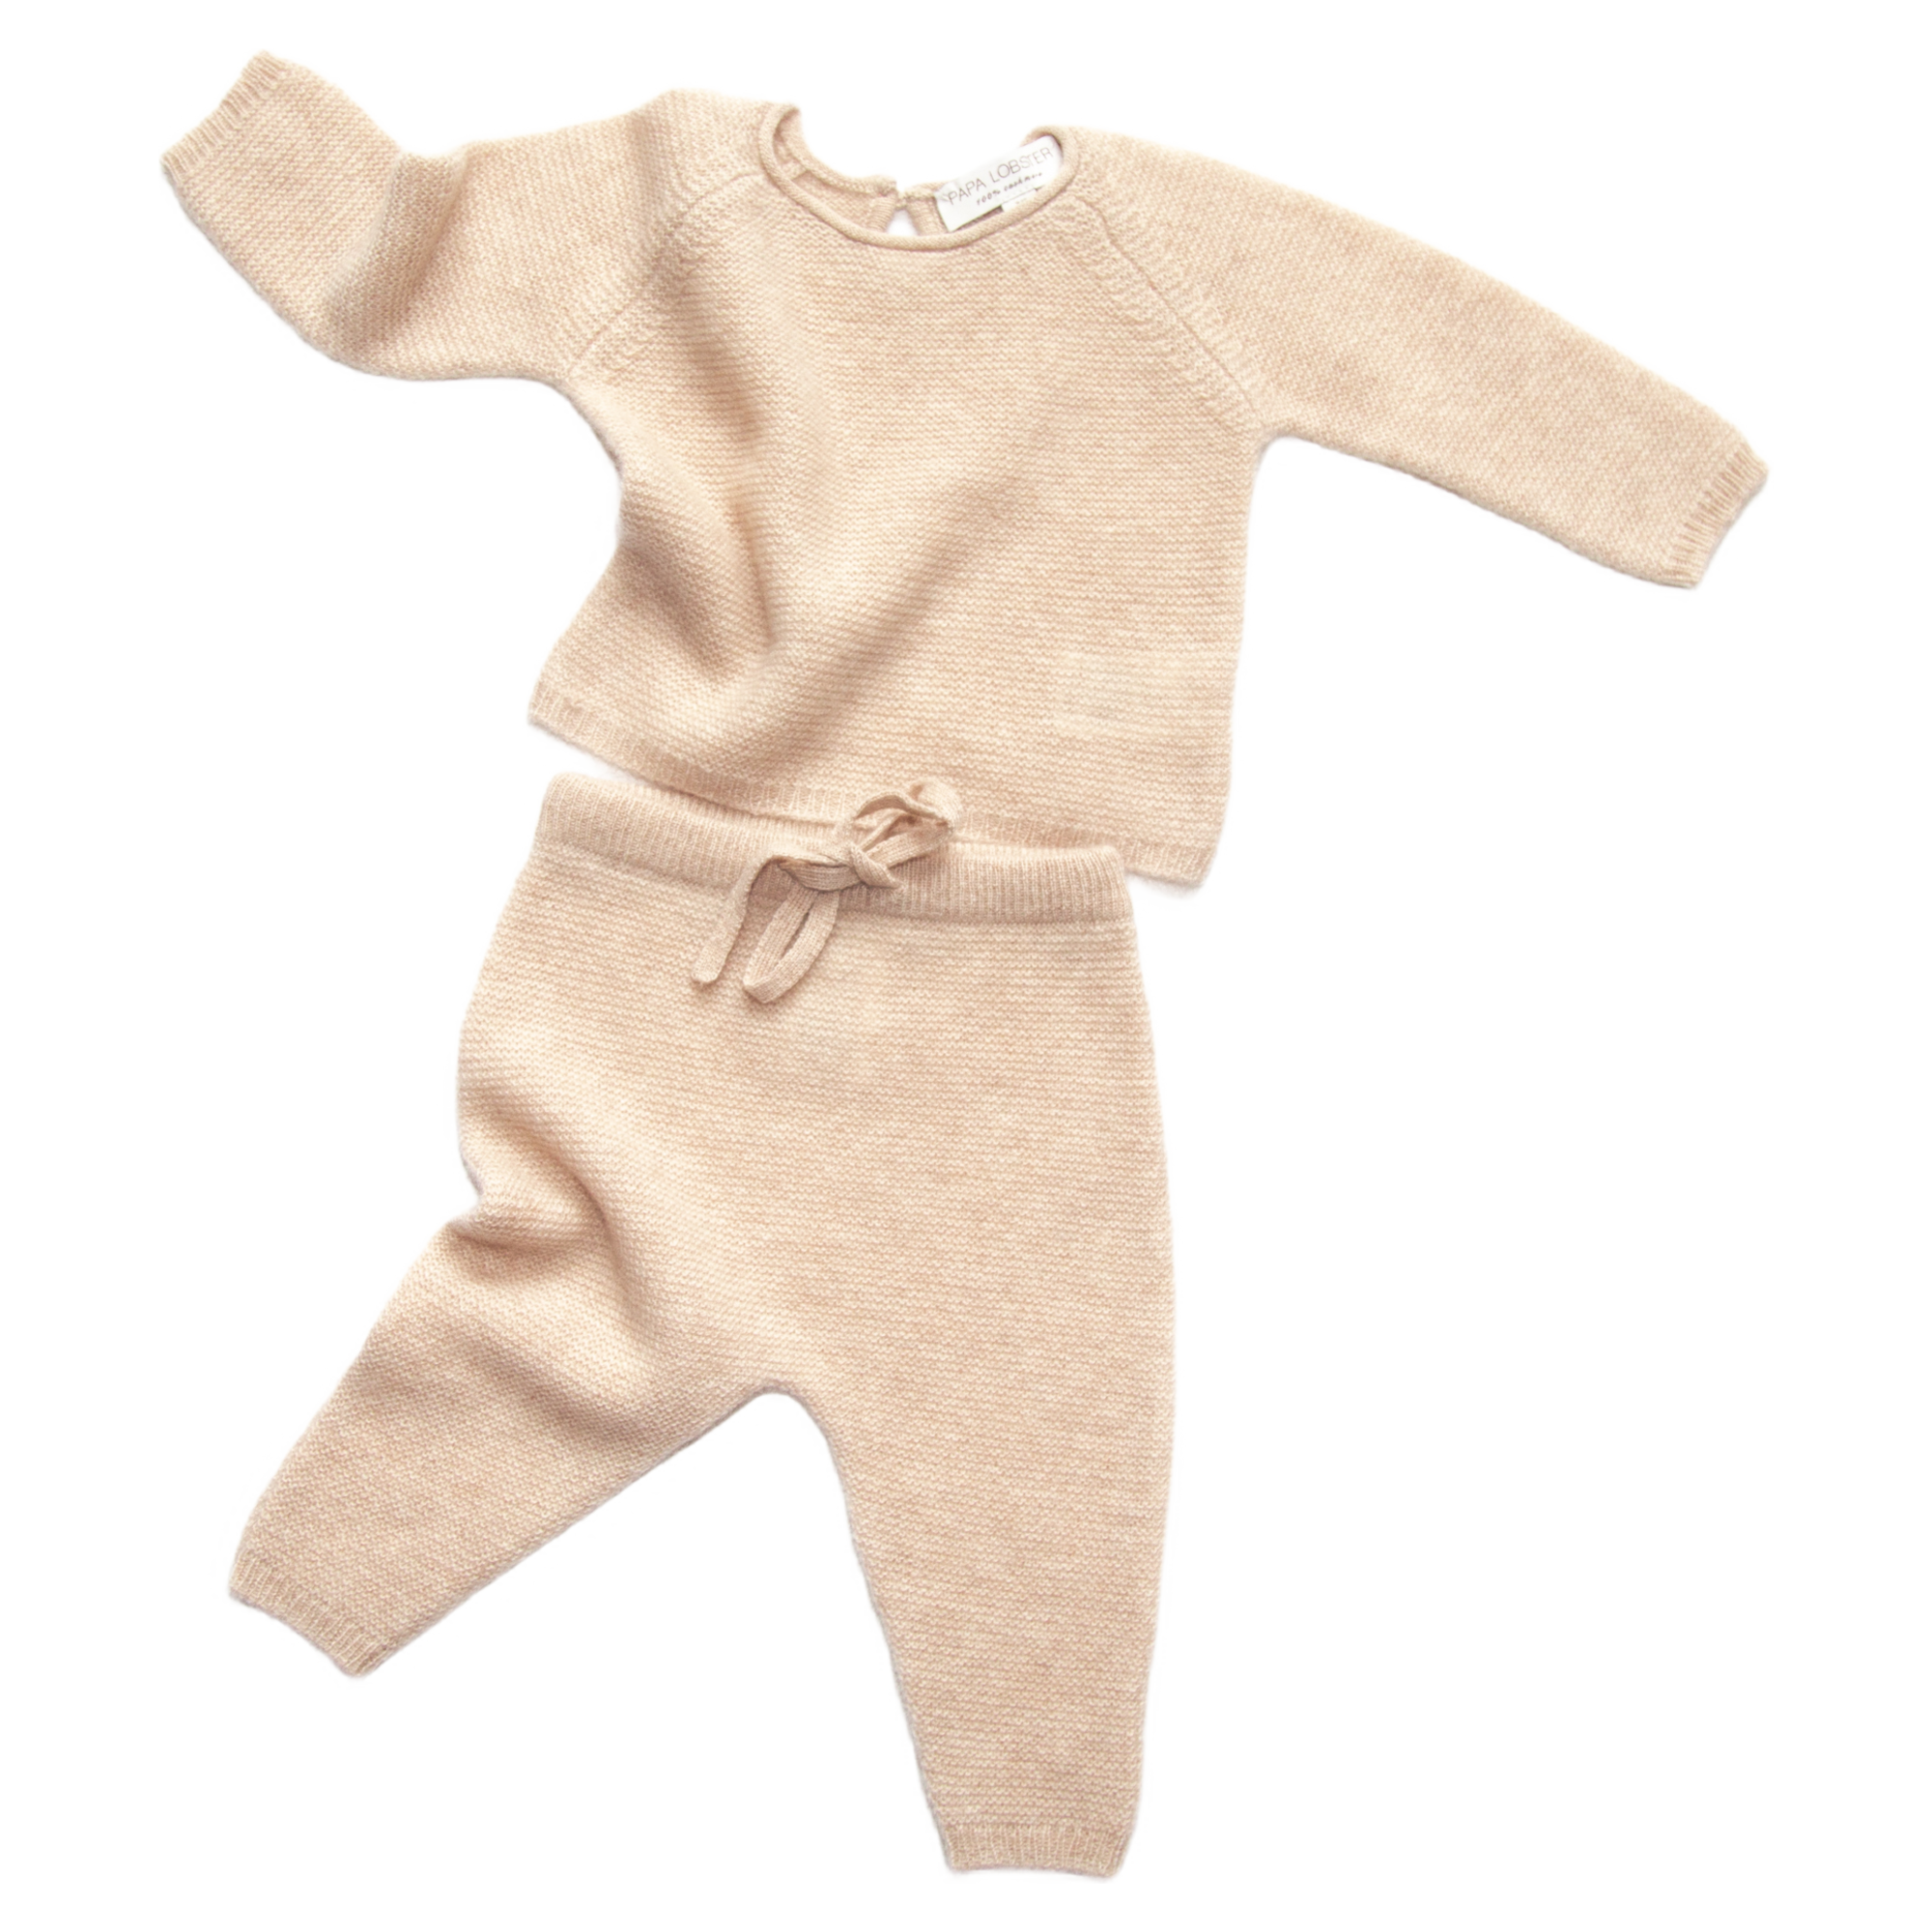 Pullover Beige - in allNATURAL + Kaschmir-Baby-Set Naturfarben Hose